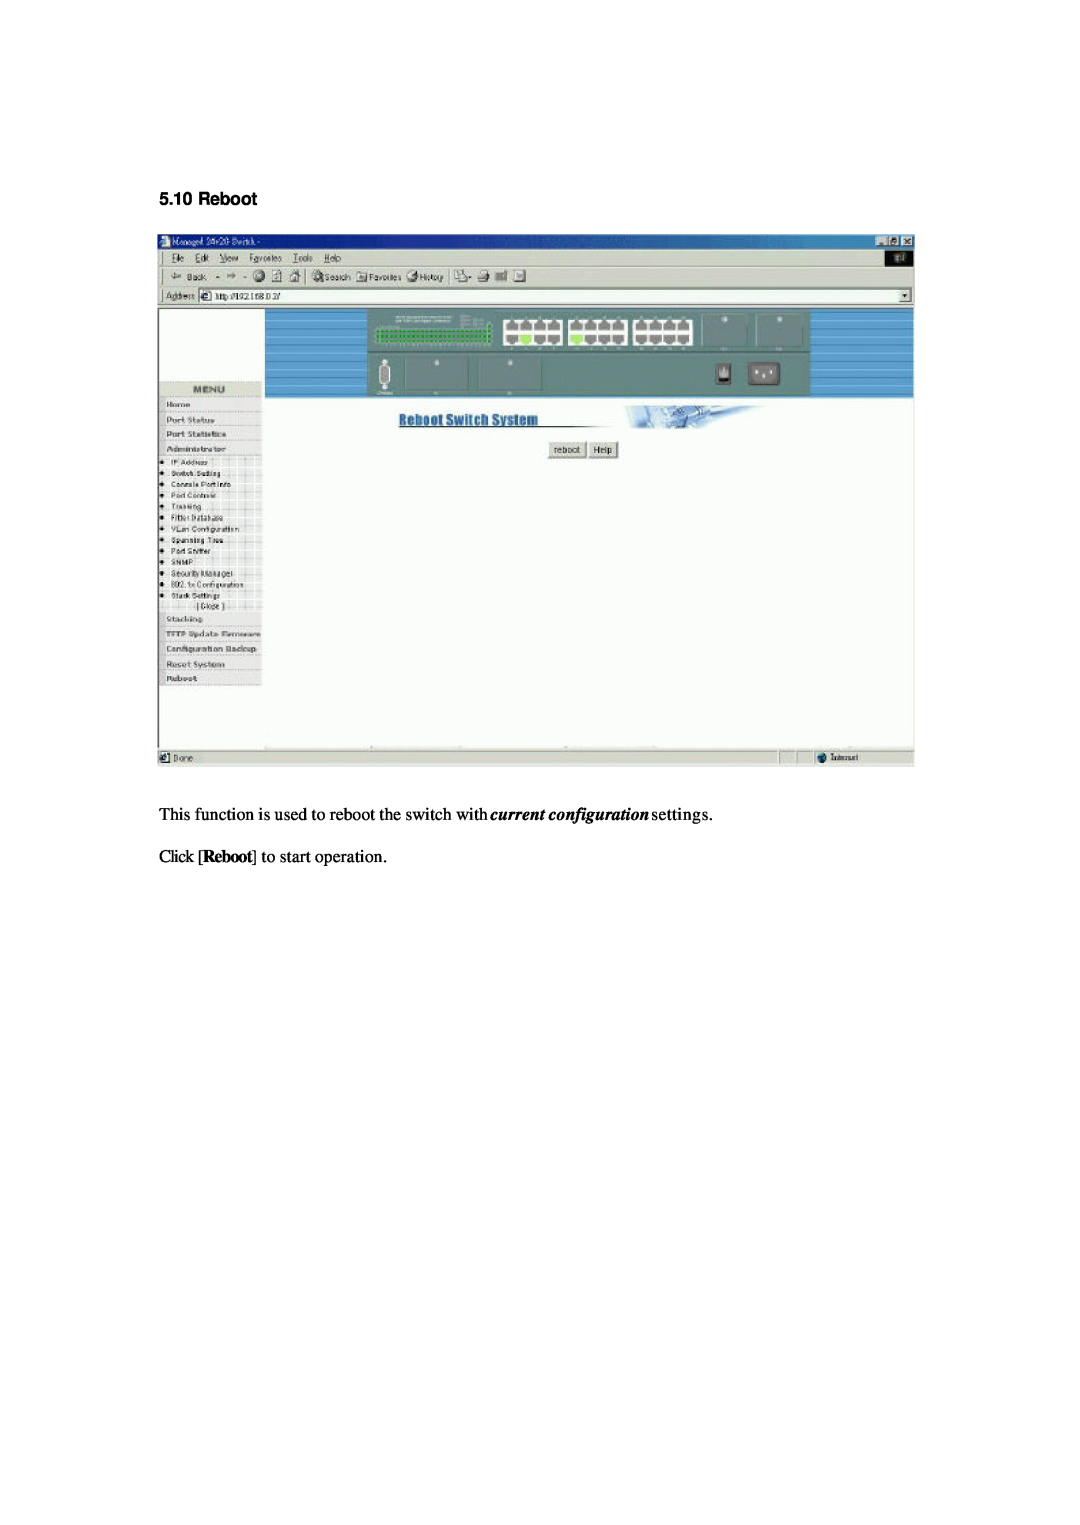 Xerox NS-2260 operation manual Click Reboot to start operation 